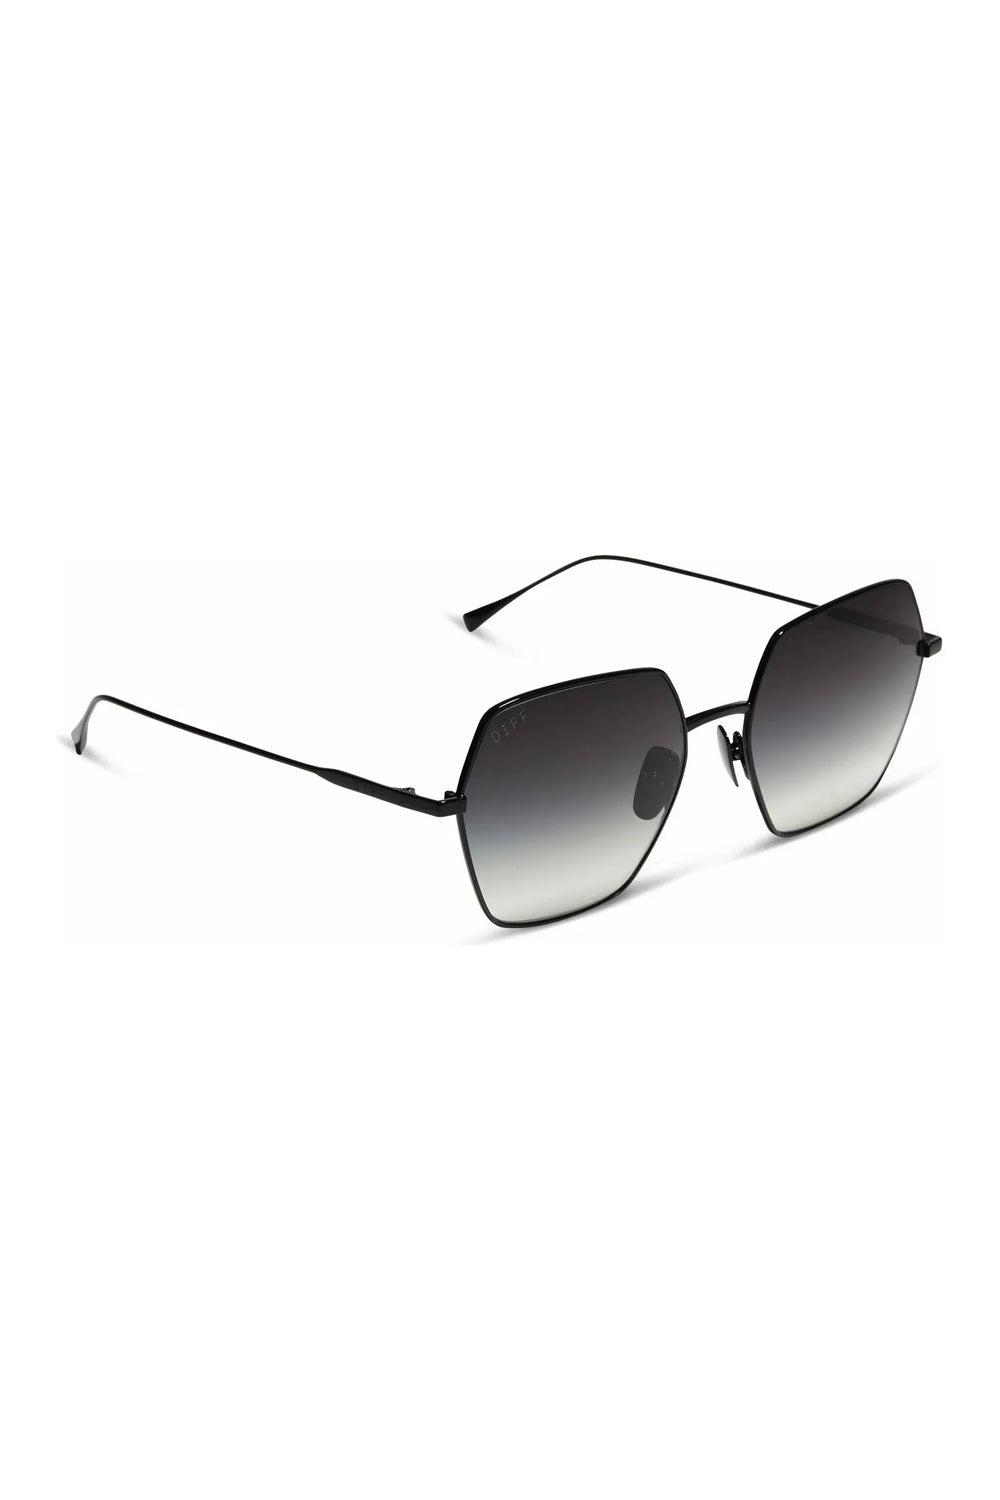 Diff Eyewear Cody Sunglasses - Matte Black - One Size